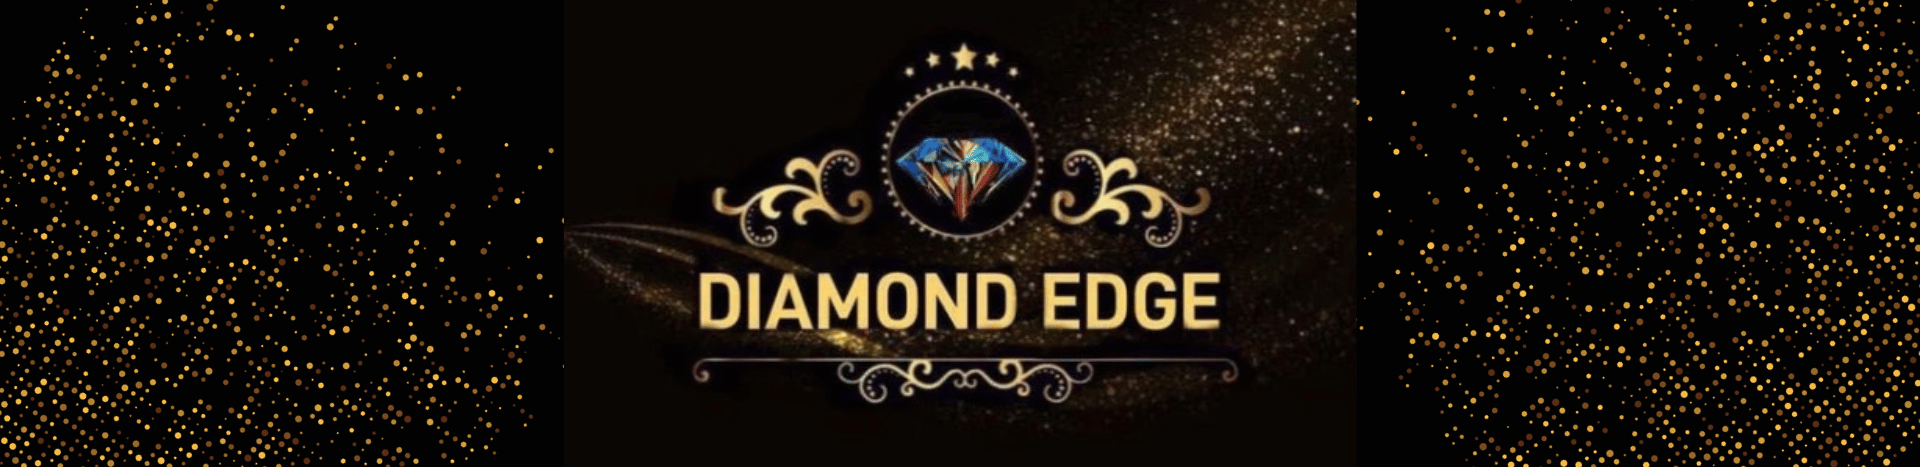 diamondedge-banner